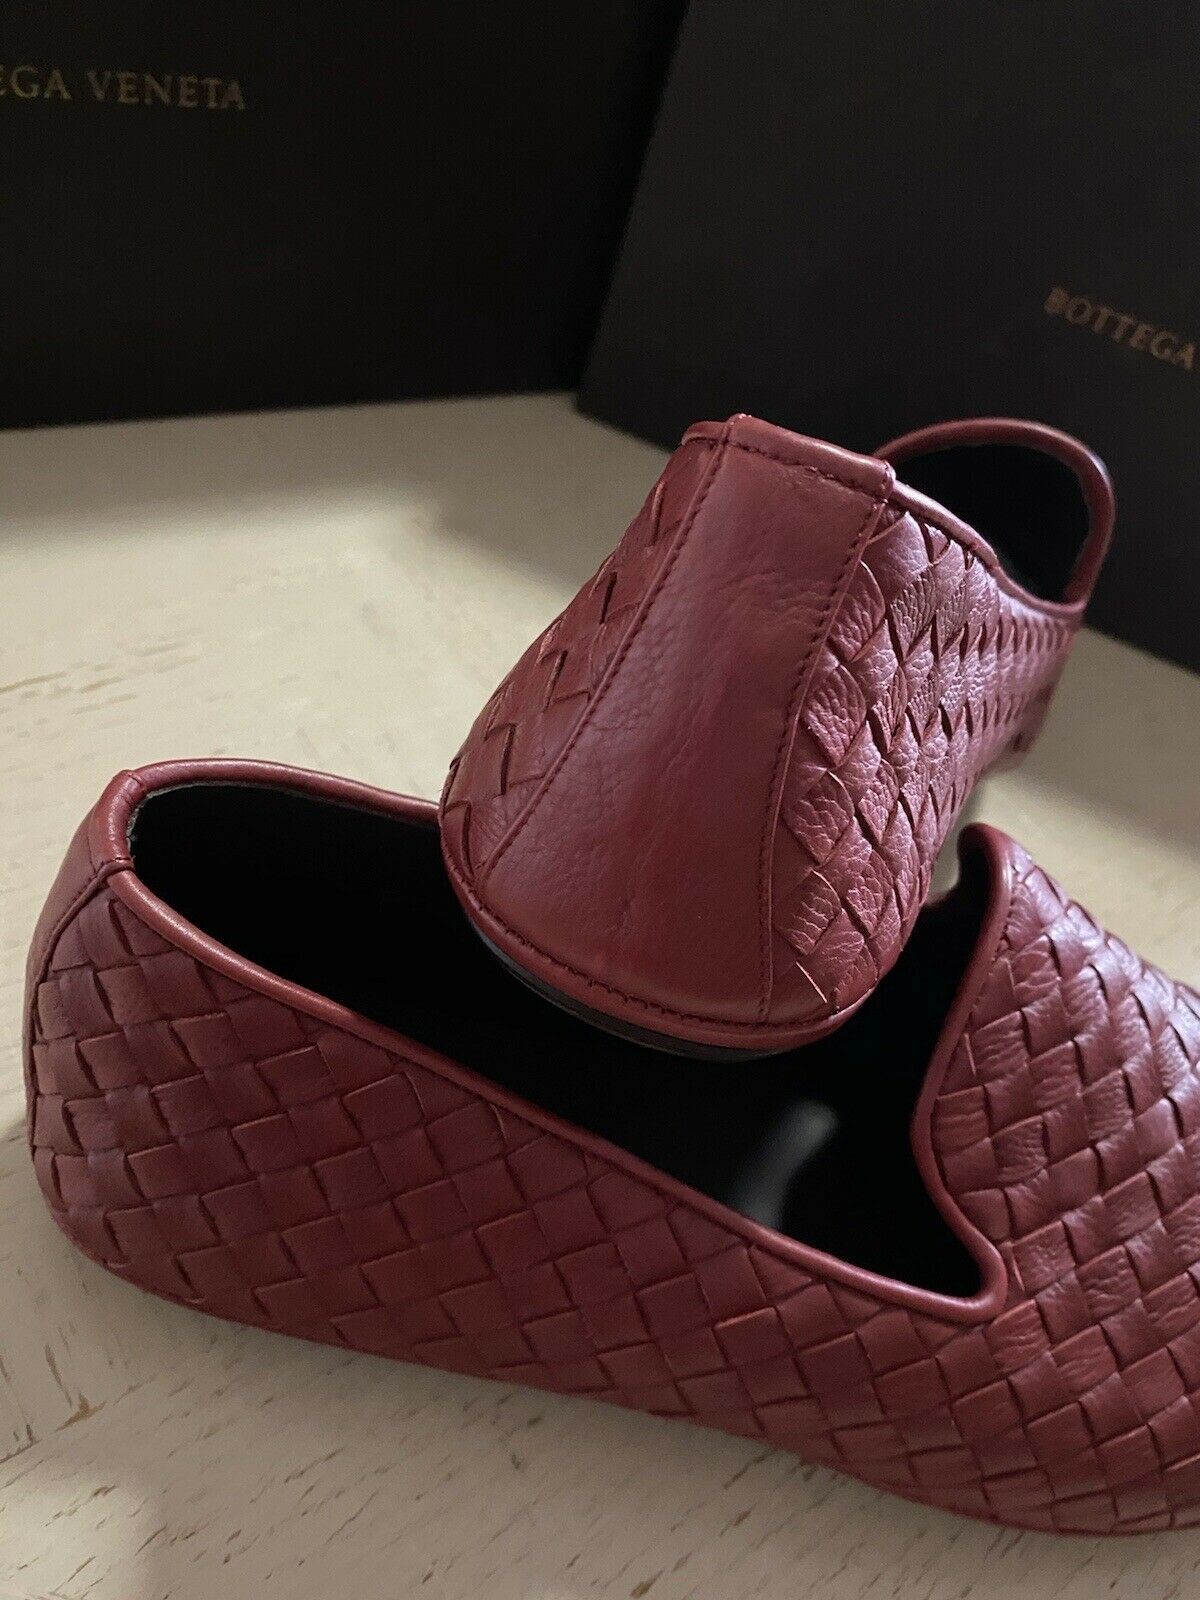 NIB $810 Bottega Veneta Men Leather Loafers Shoes Burgundy/Red 10 US/43 Eu